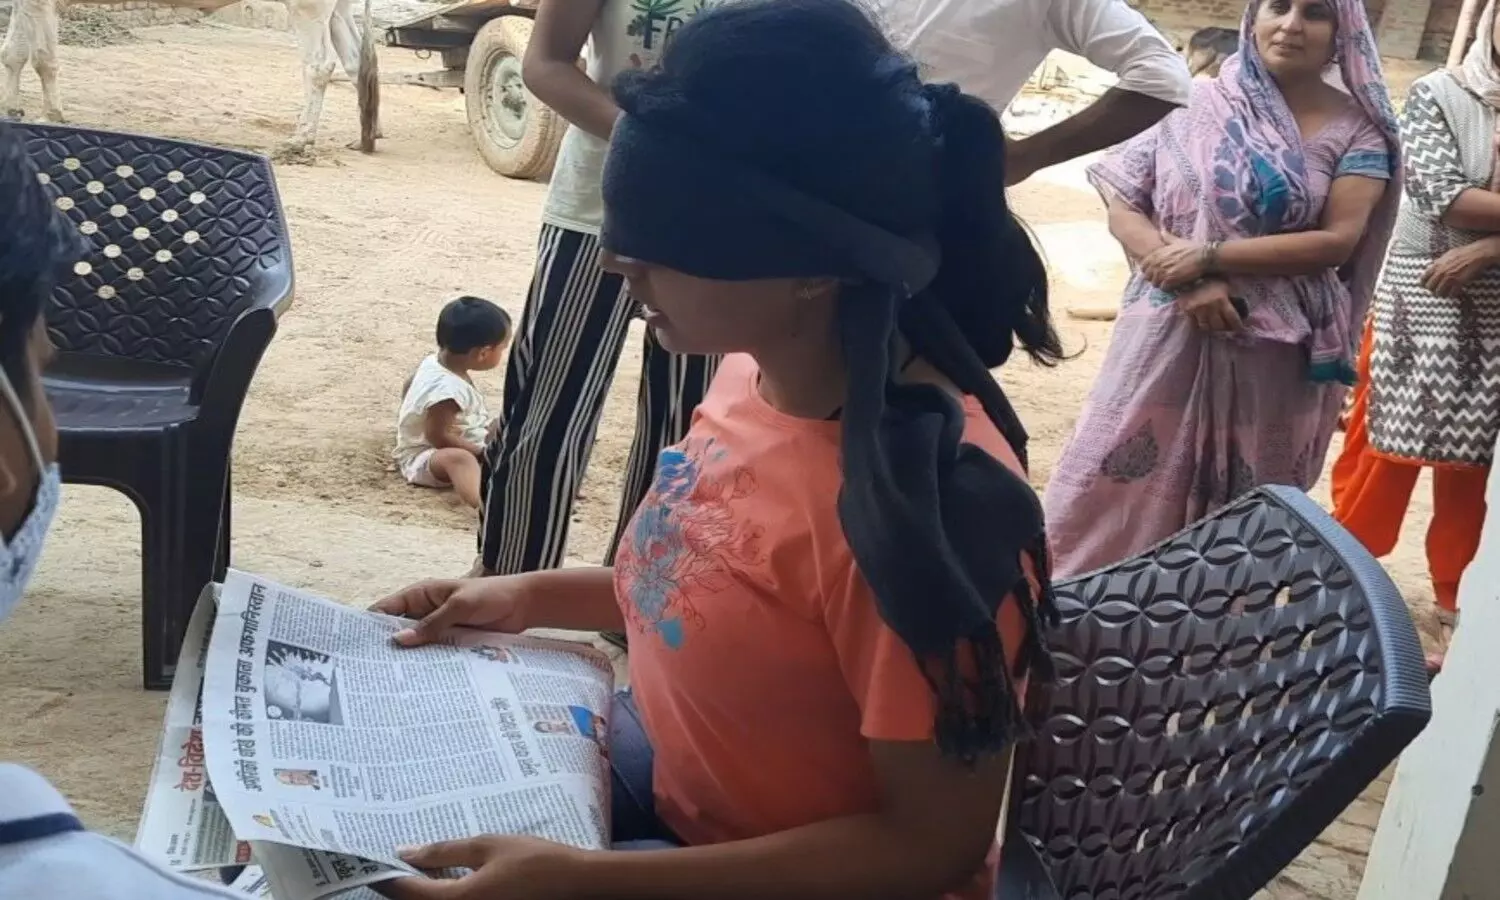 Diksha reading newspaper with closed eyes